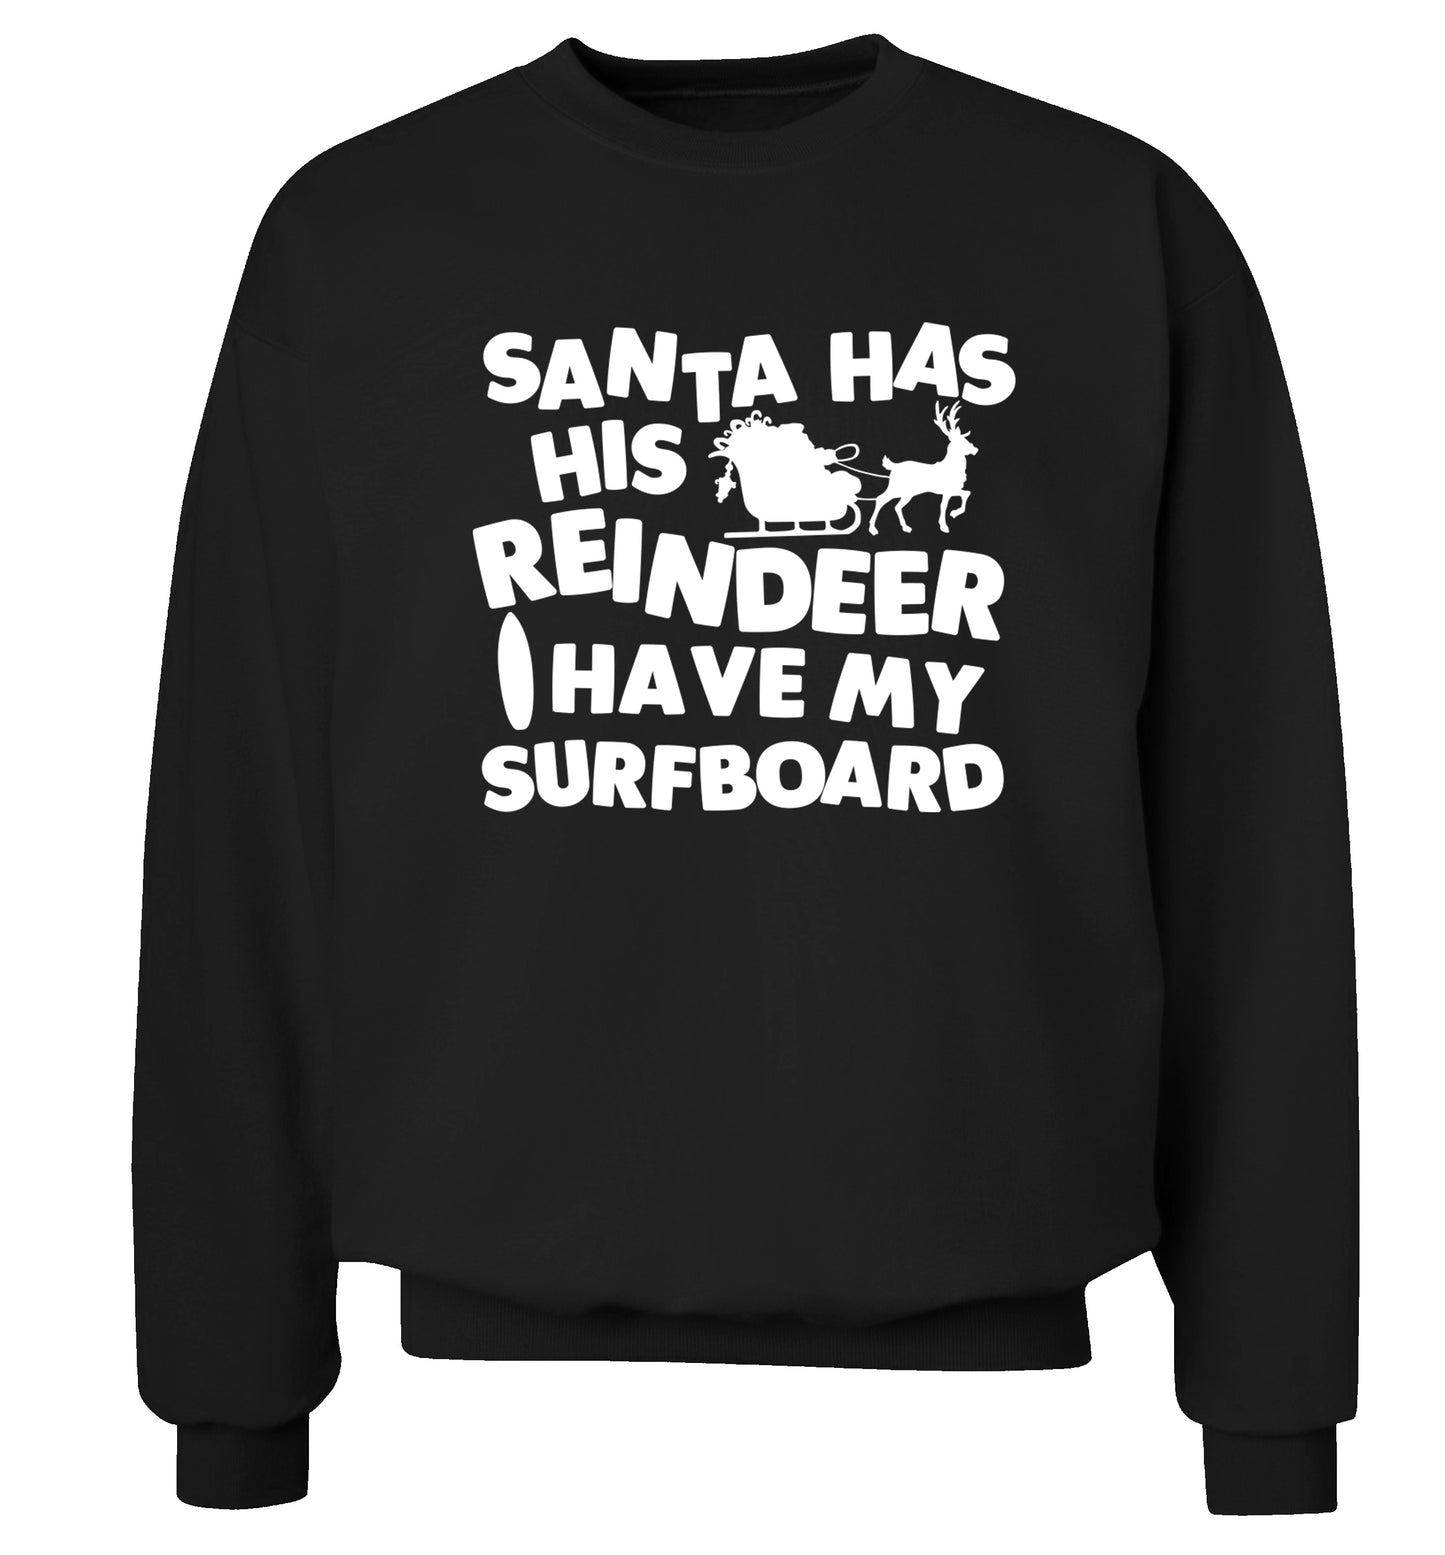 Santa has his reindeer I have my surfboard Adult's unisex black Sweater 2XL